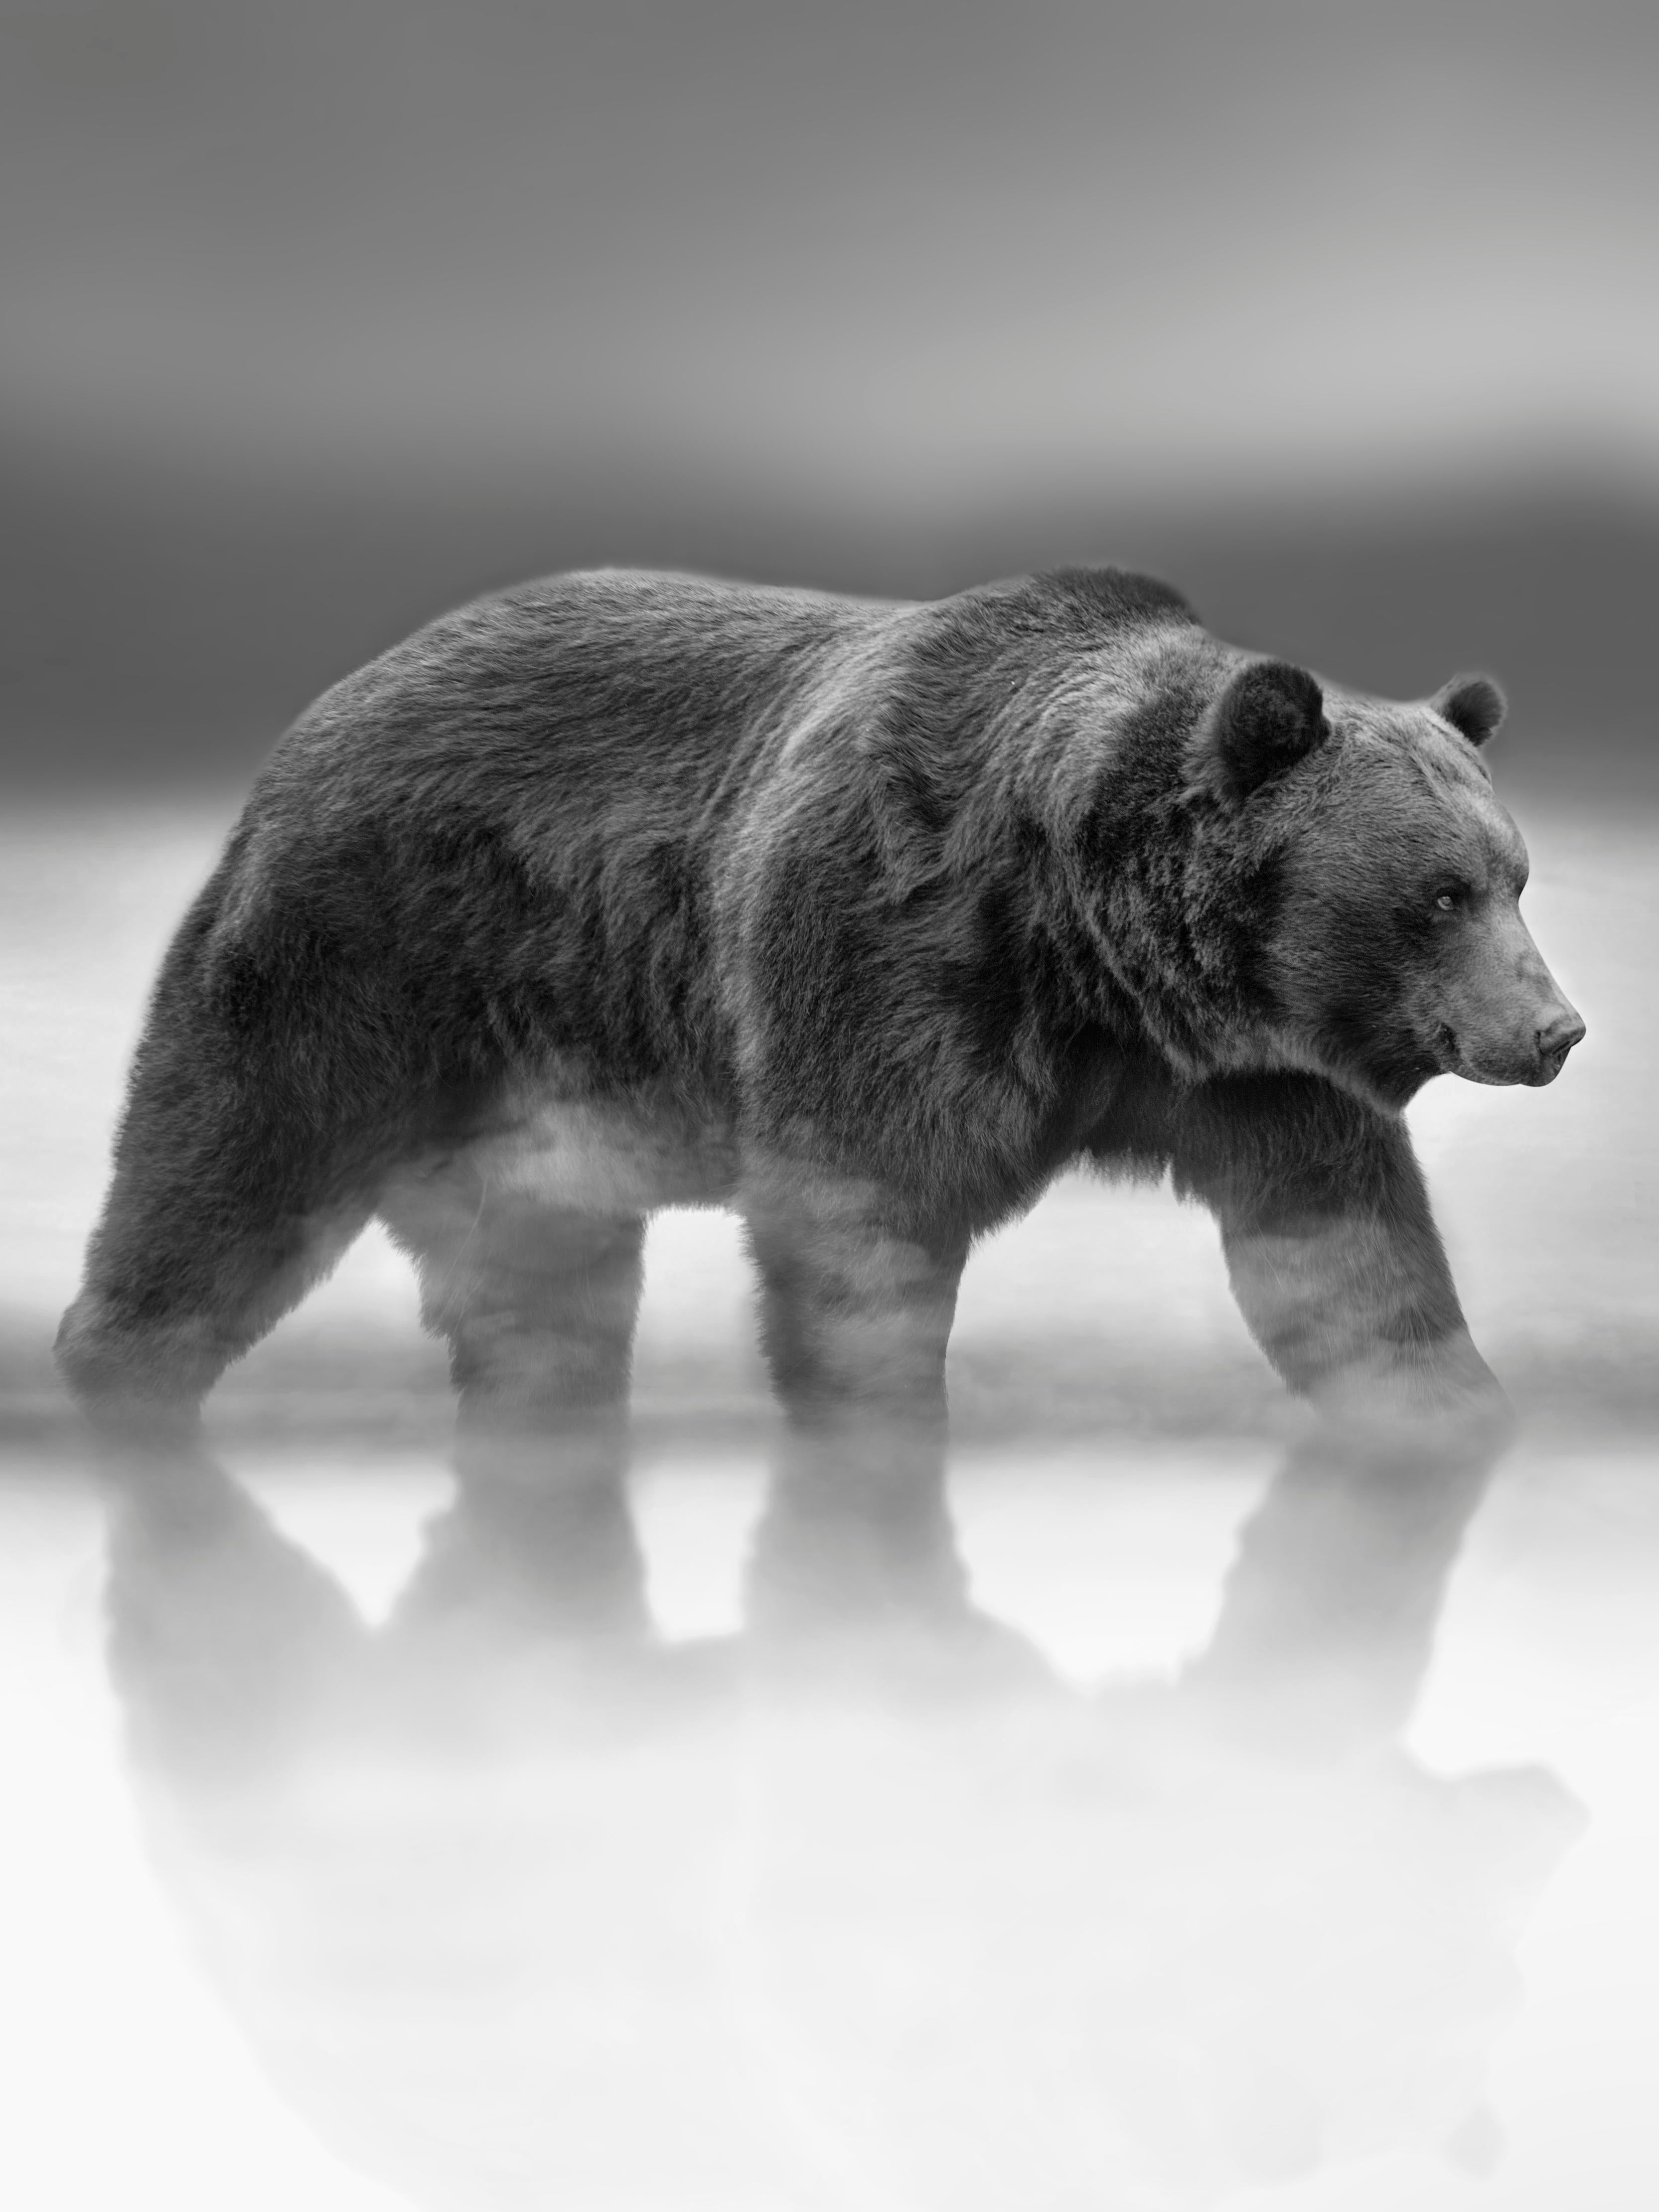 Shane Russeck Animal Print - Kodiak Island 36x48 Black & White Photography, Kodiak Bear Wildlife Photograph